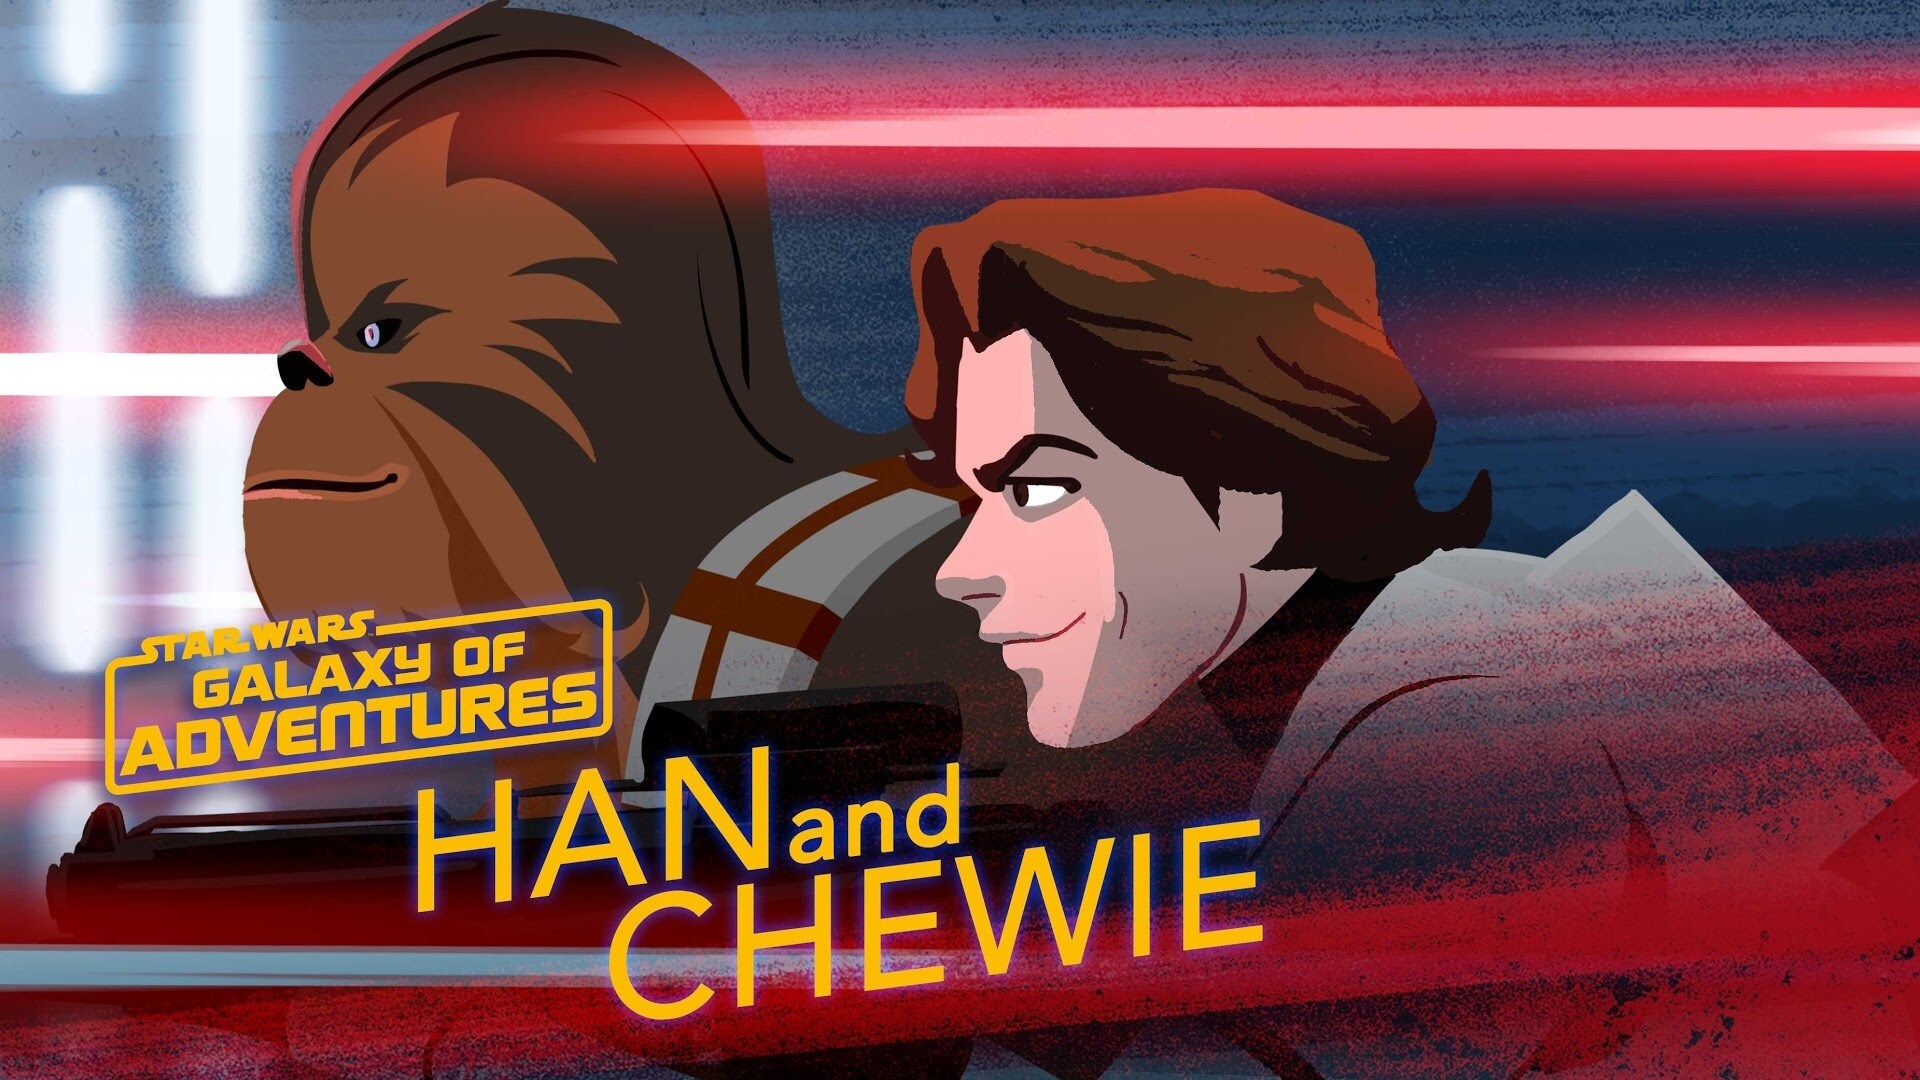 Han and Chewie - A Lifelong Partnership | Star Wars Galaxy of Adventures